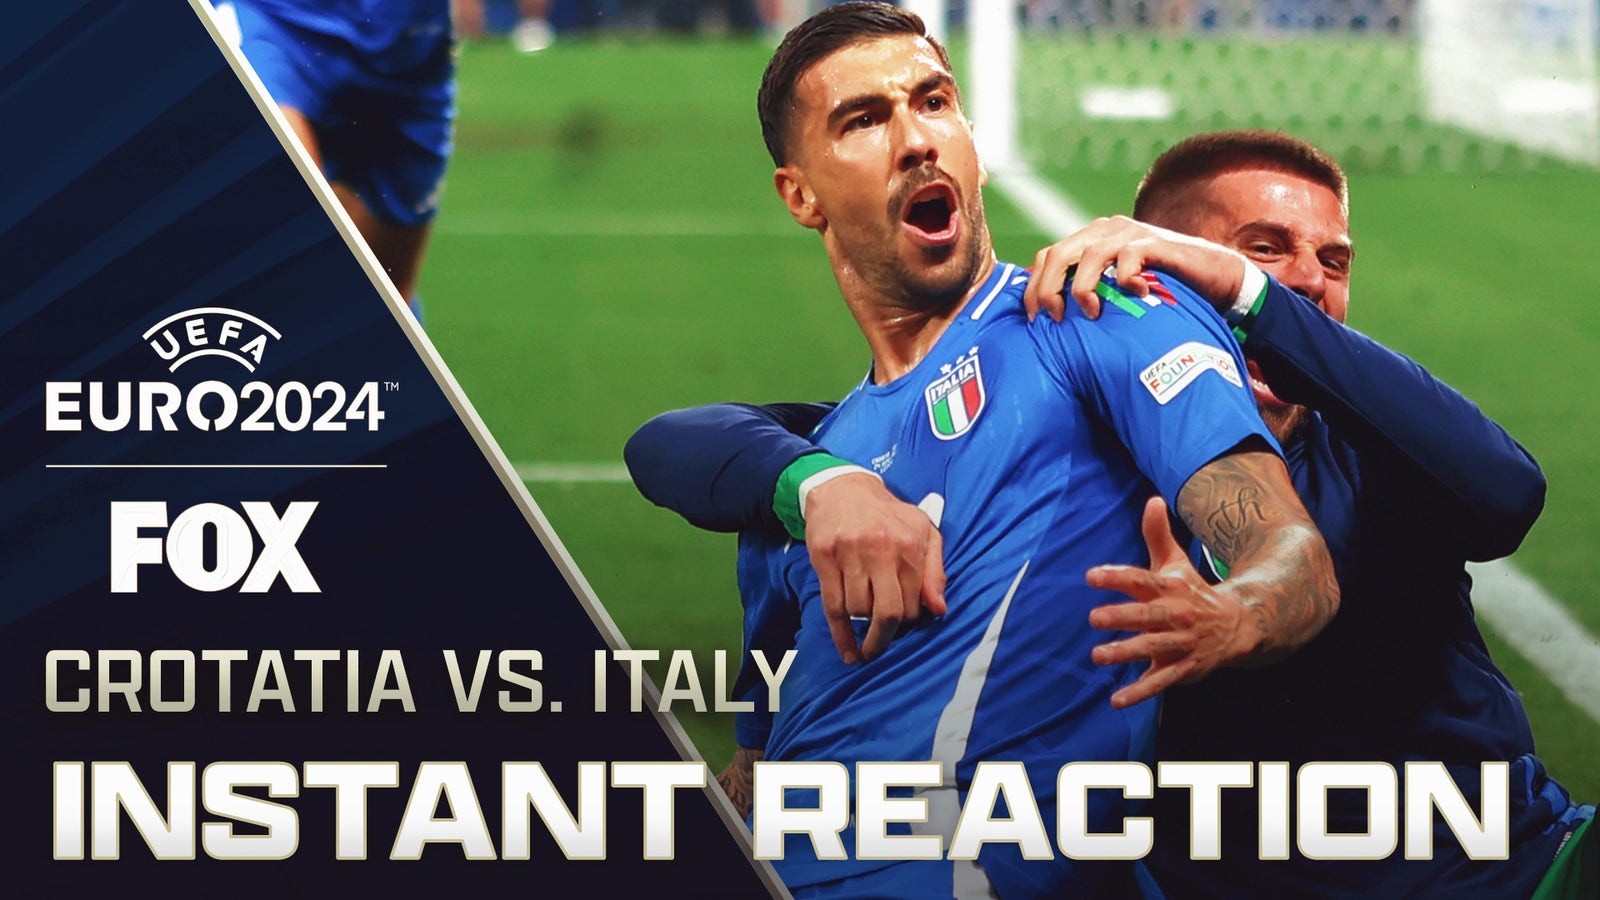 Croatia vs. Italy: Instant Analysis following RIDICULOUS finish